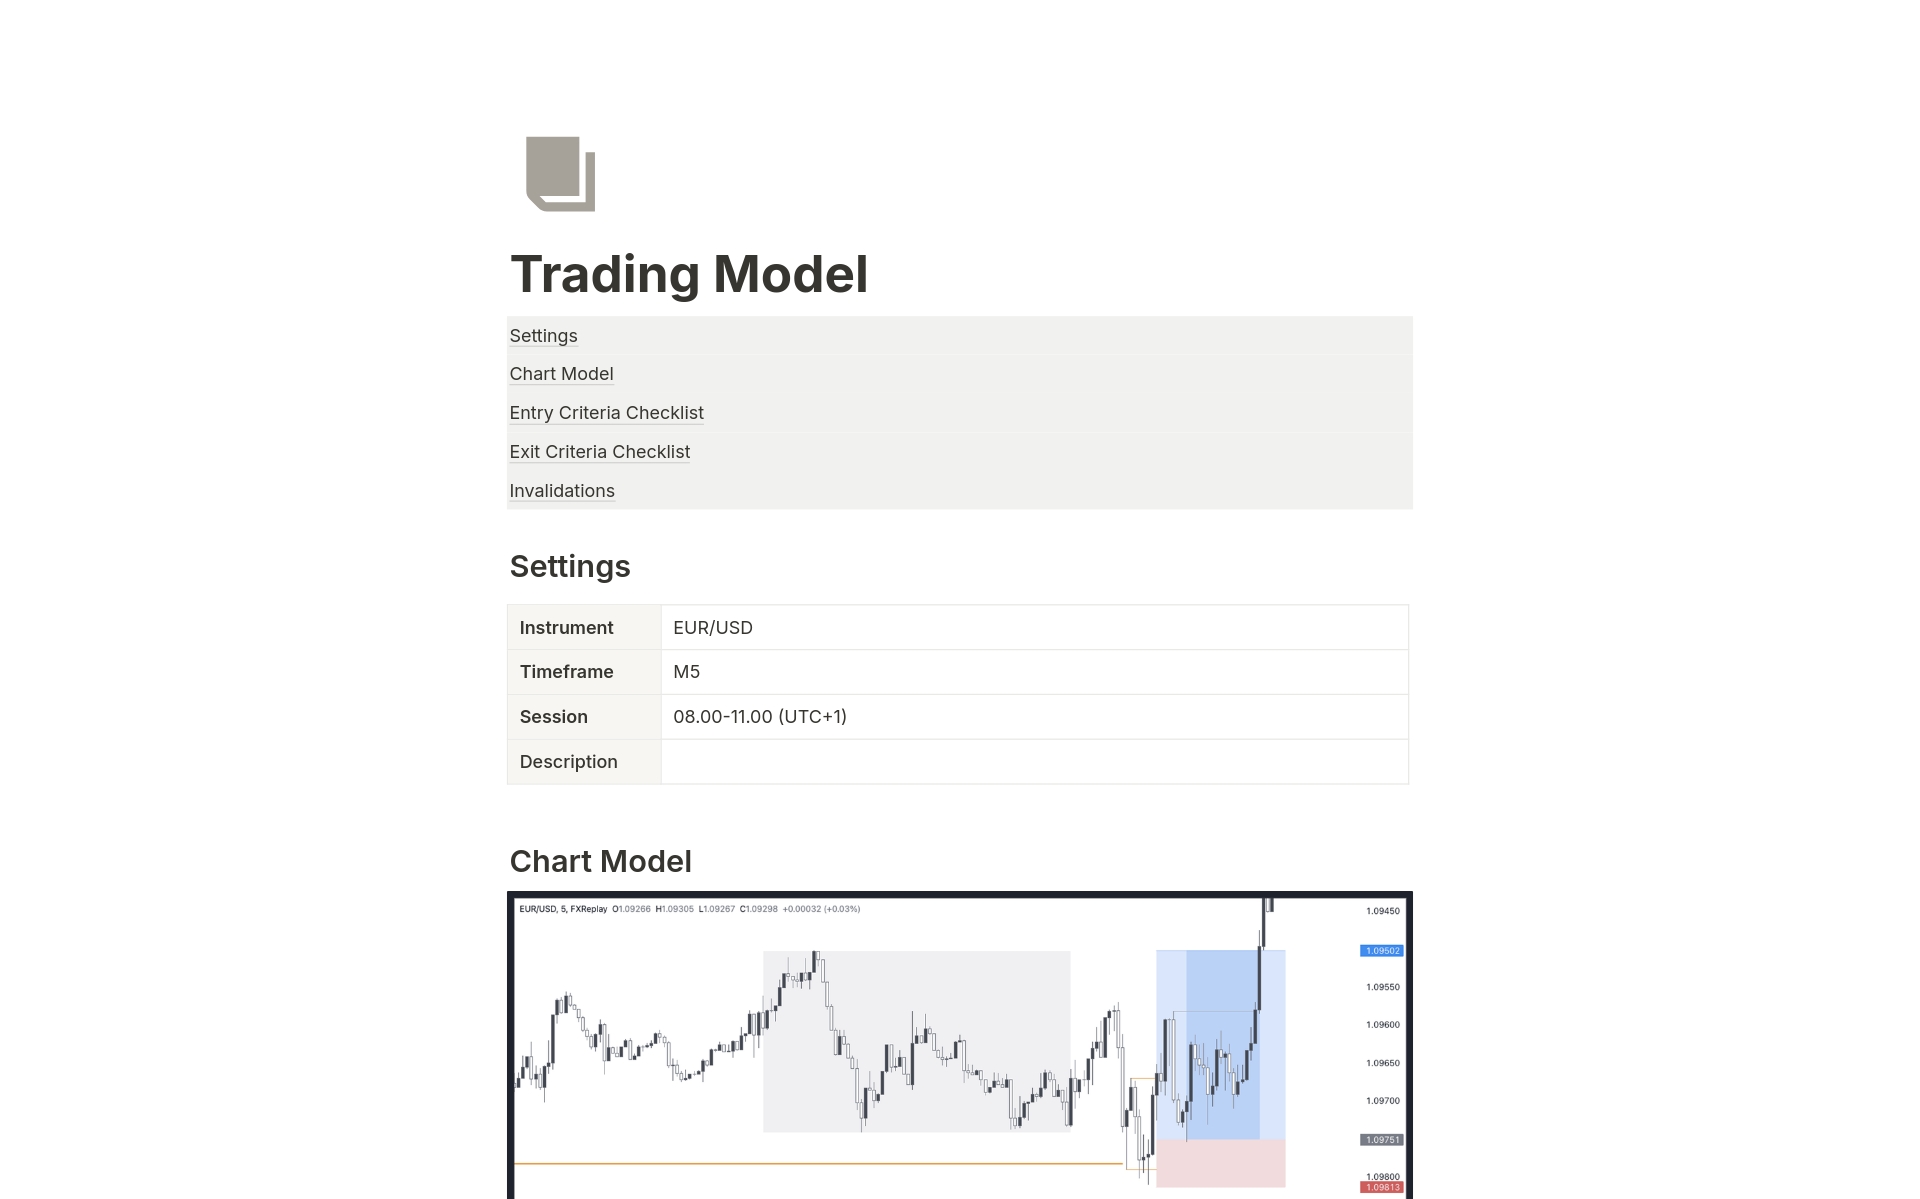 Vista previa de una plantilla para Trading Model